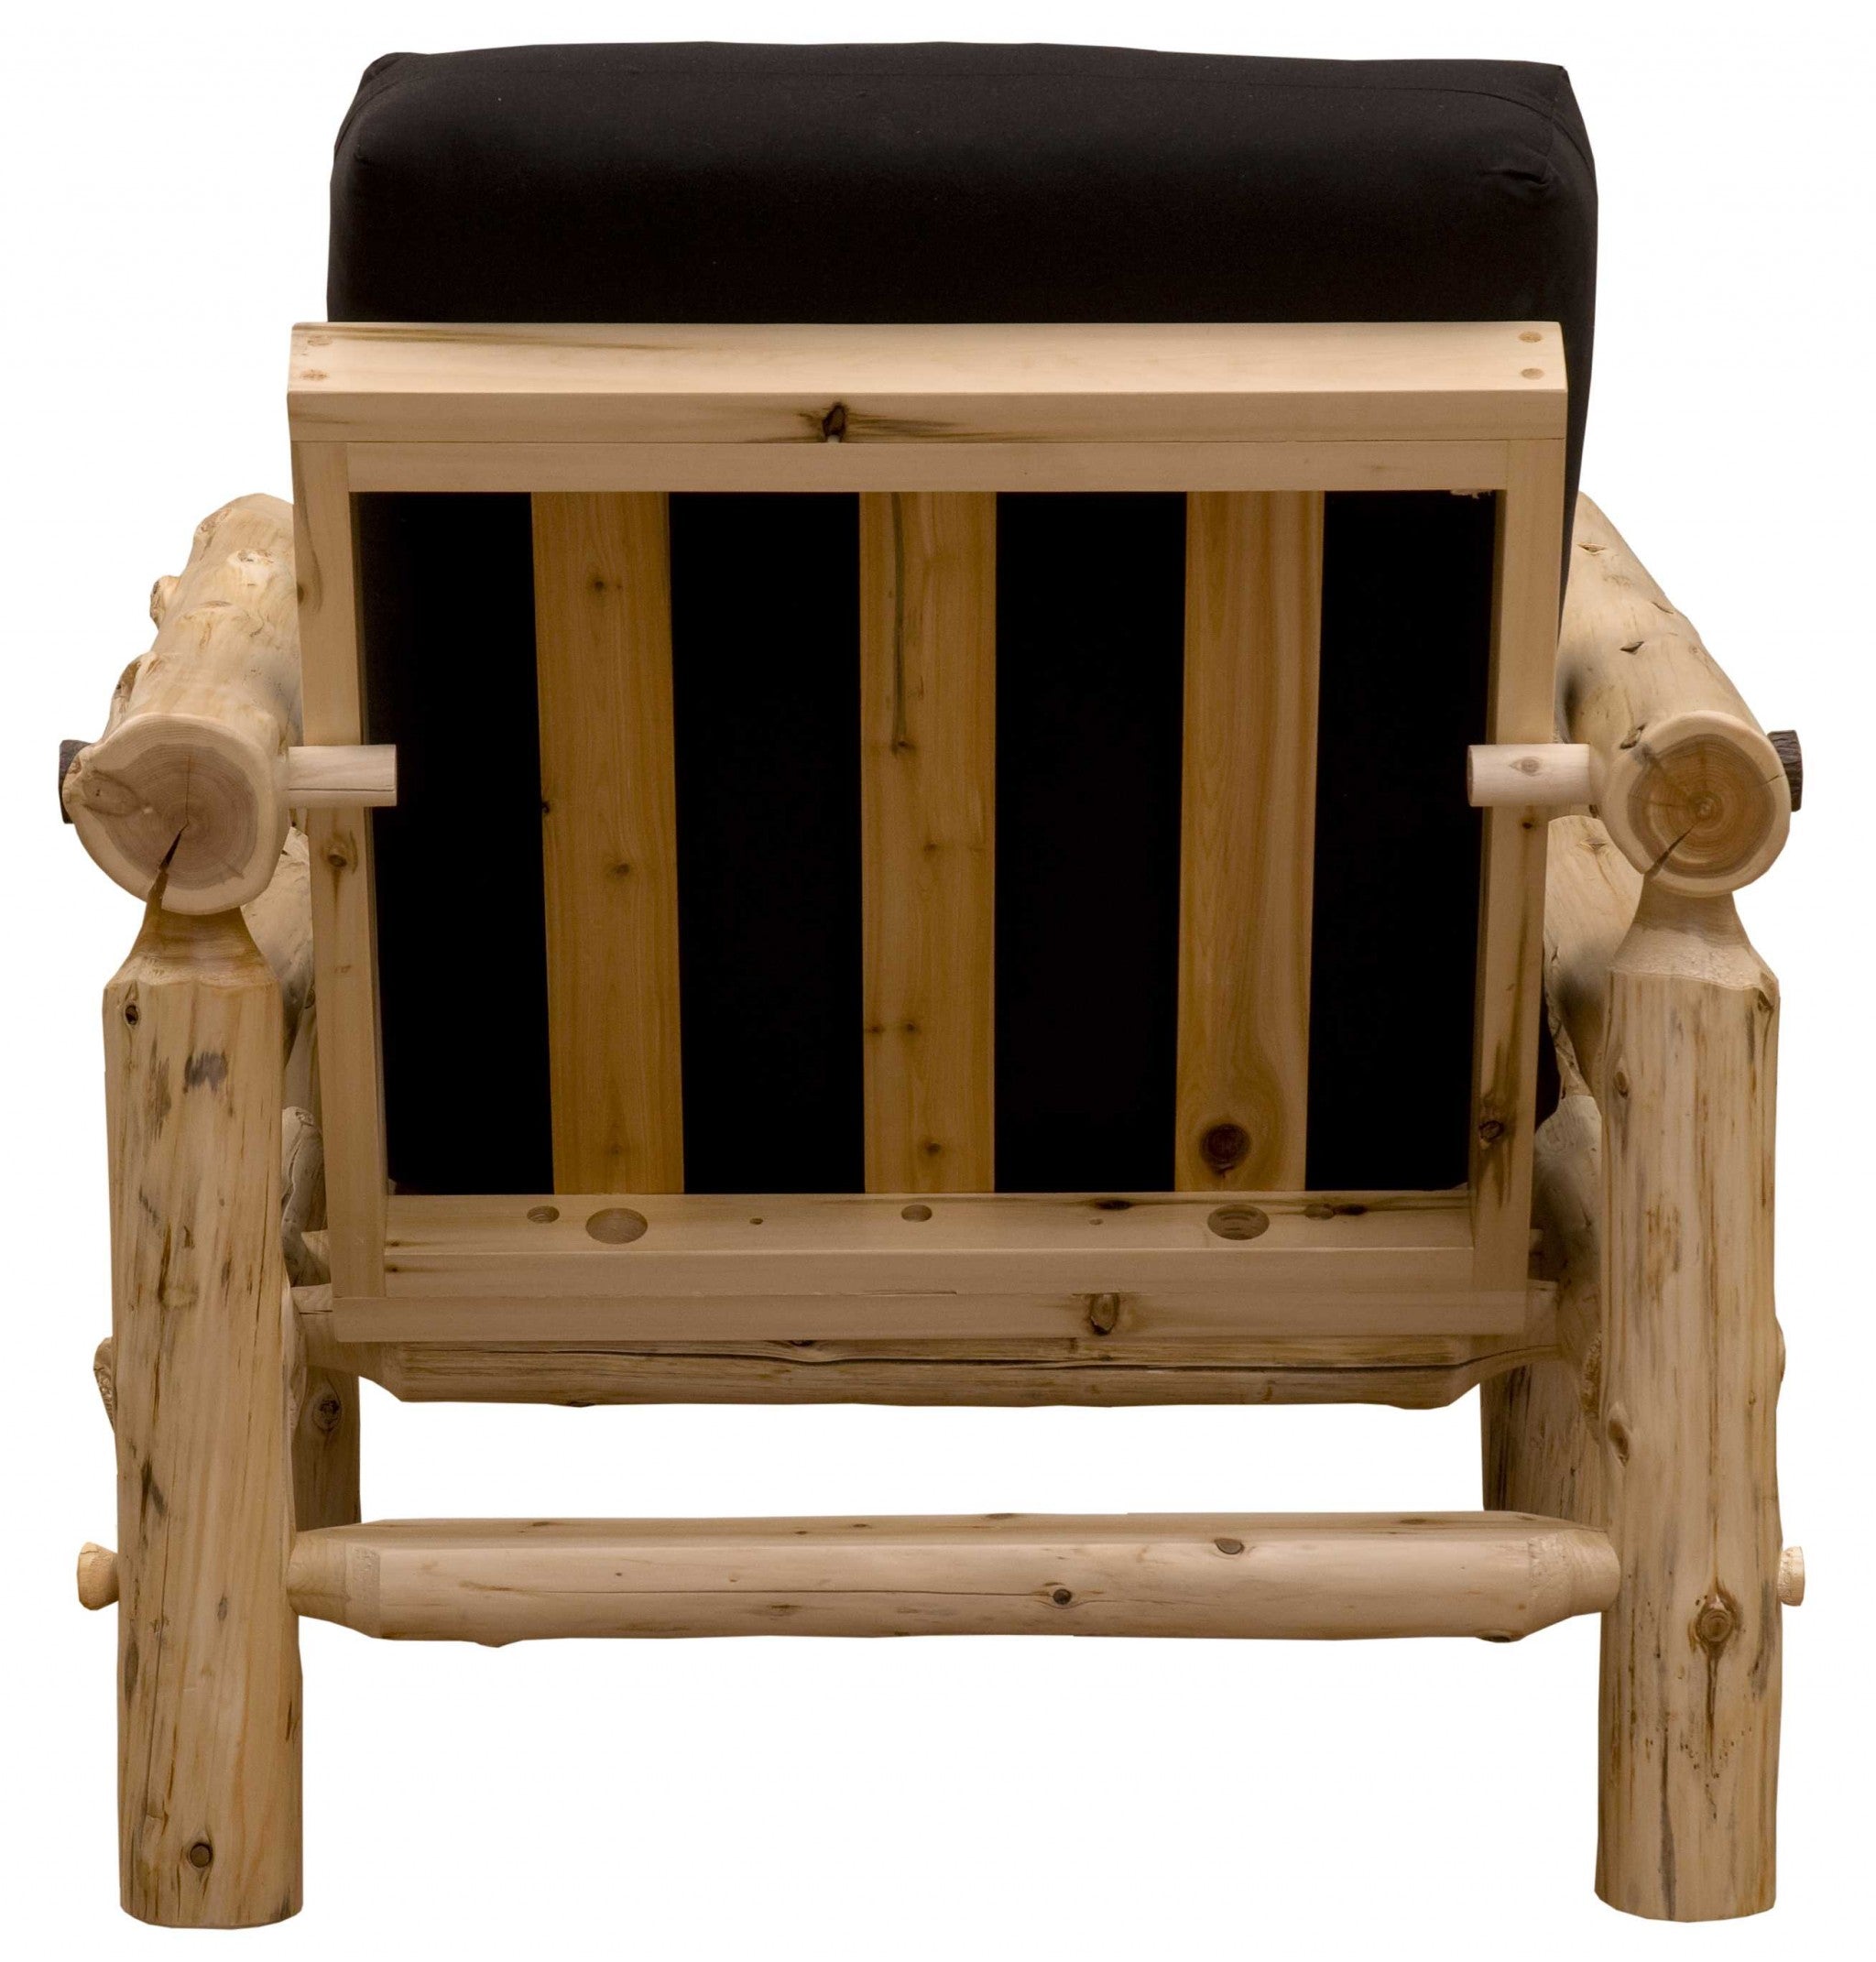 Authentic Log Cabin Natural Cedar Futon Chair and Ottoman Set